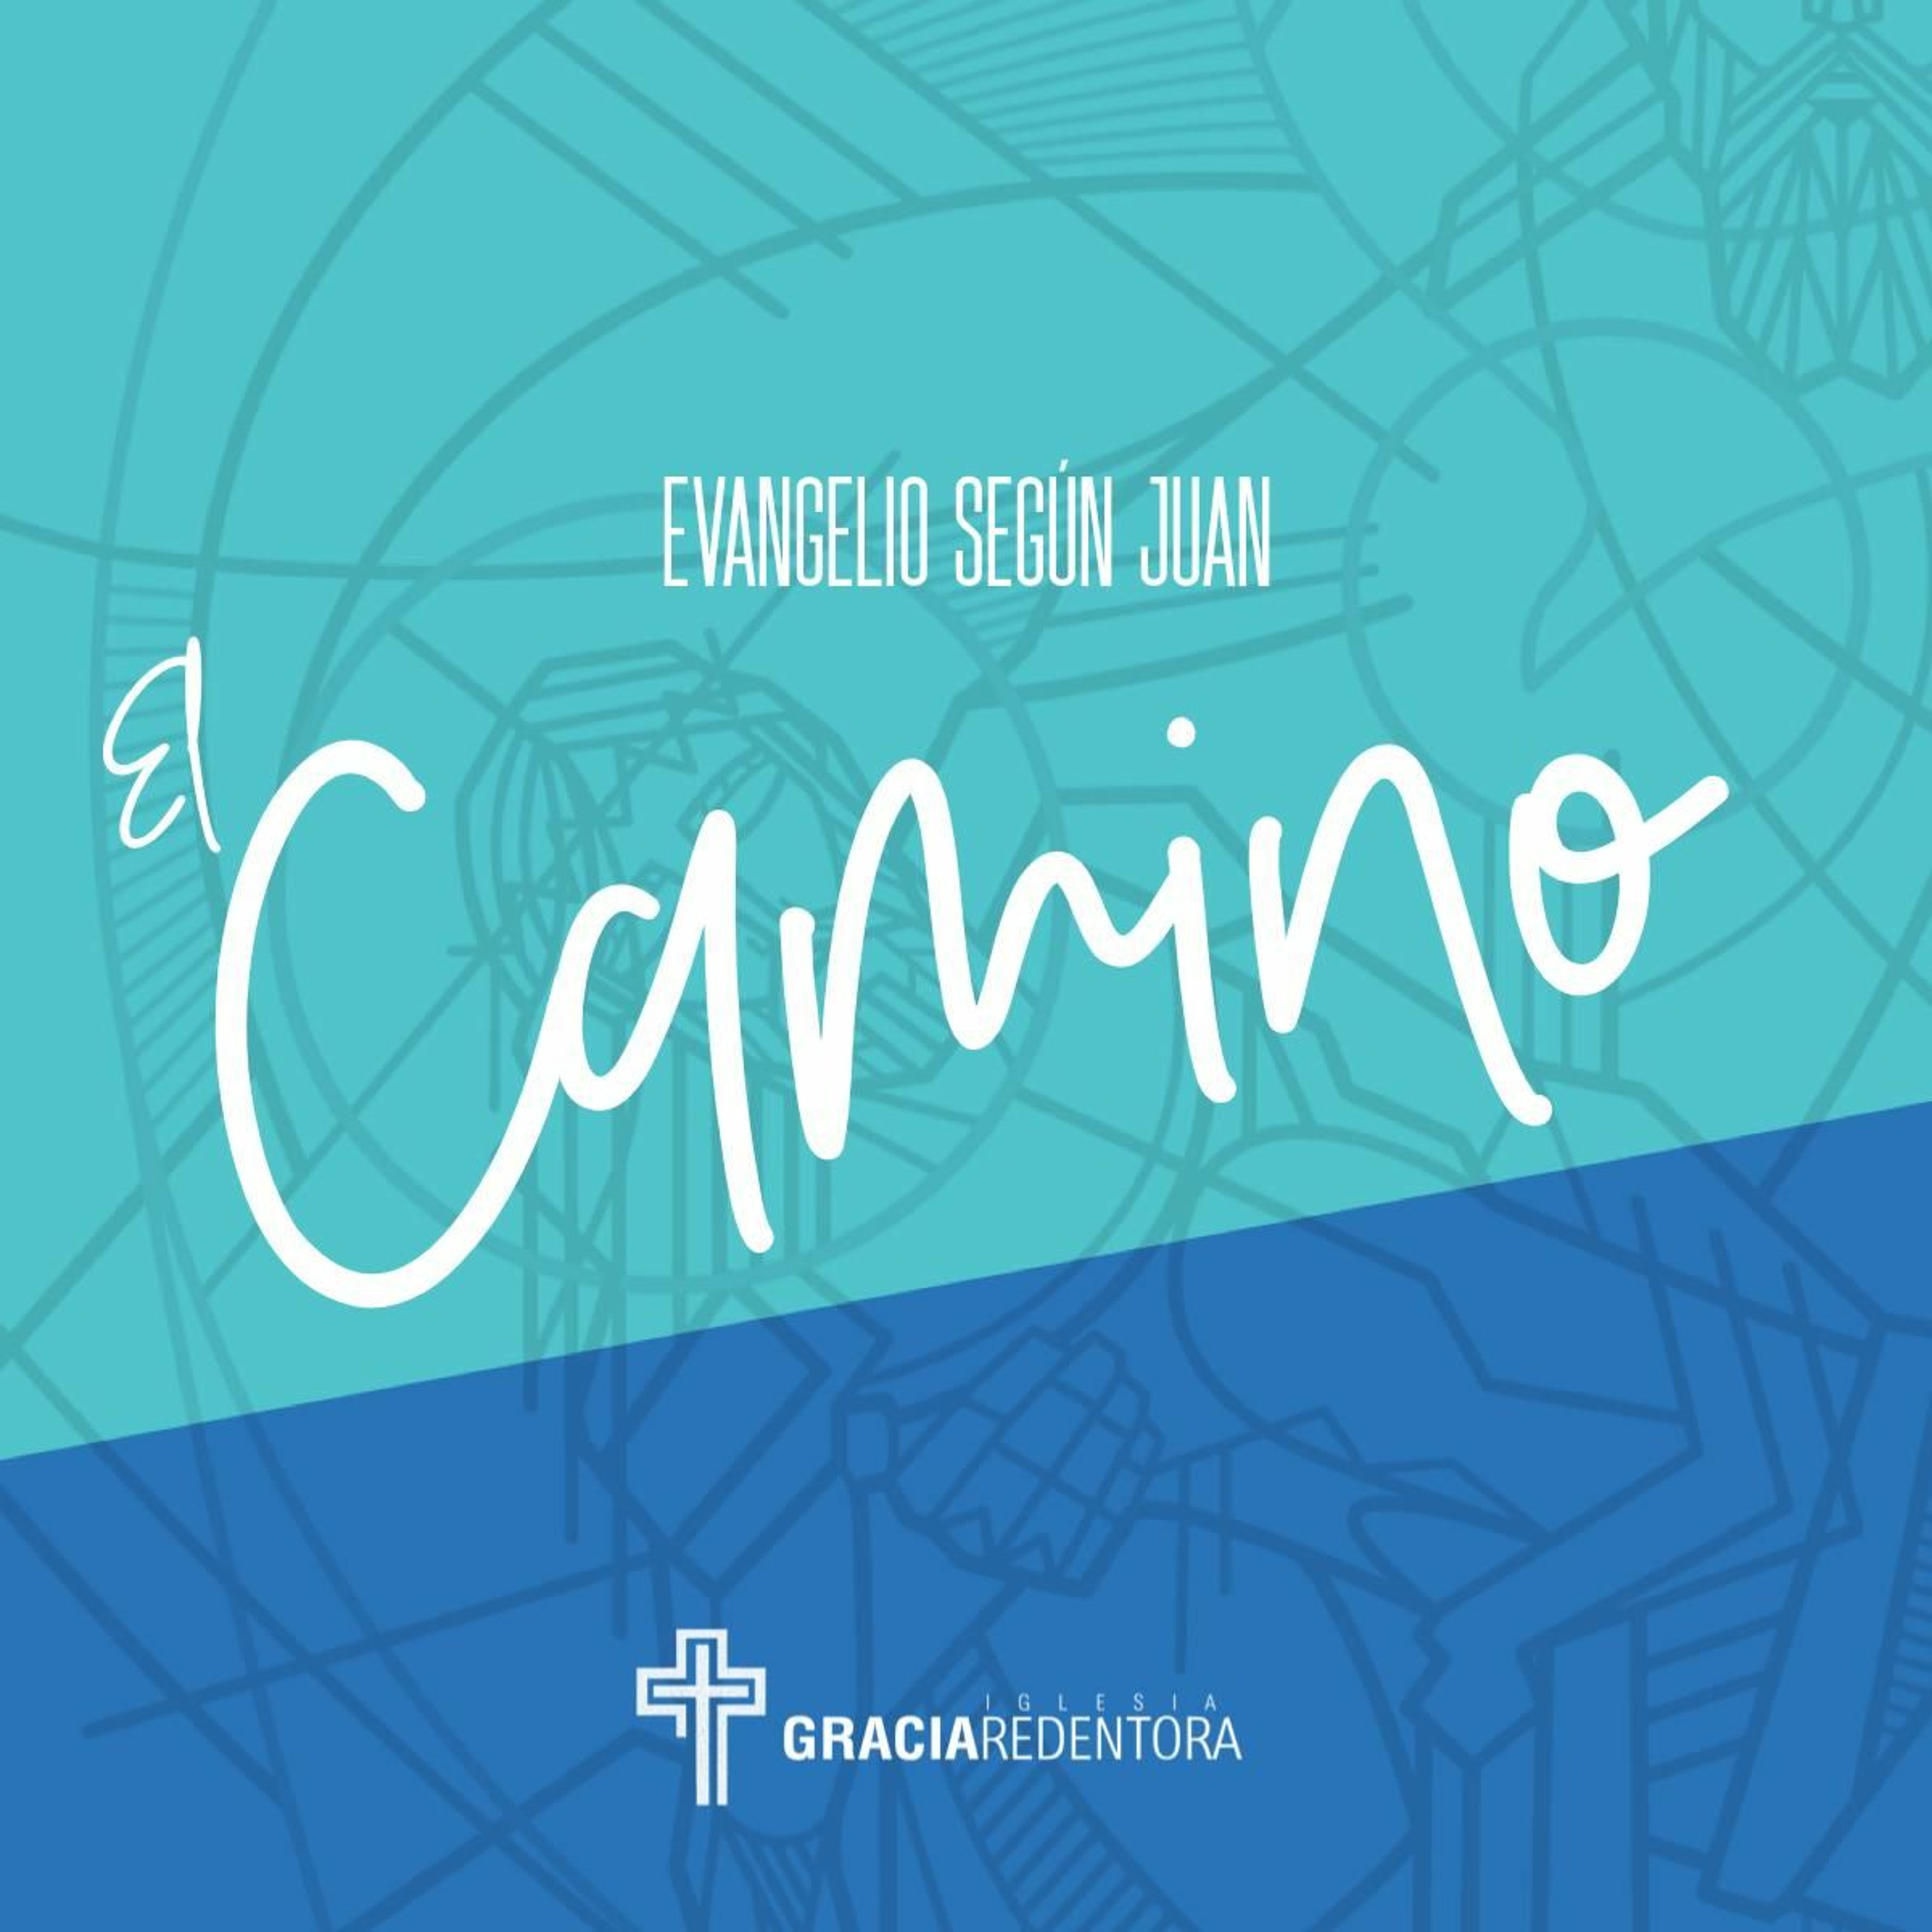 El Camino -  Juan 13.36 - 14.14 - Evangelio Segun Juan